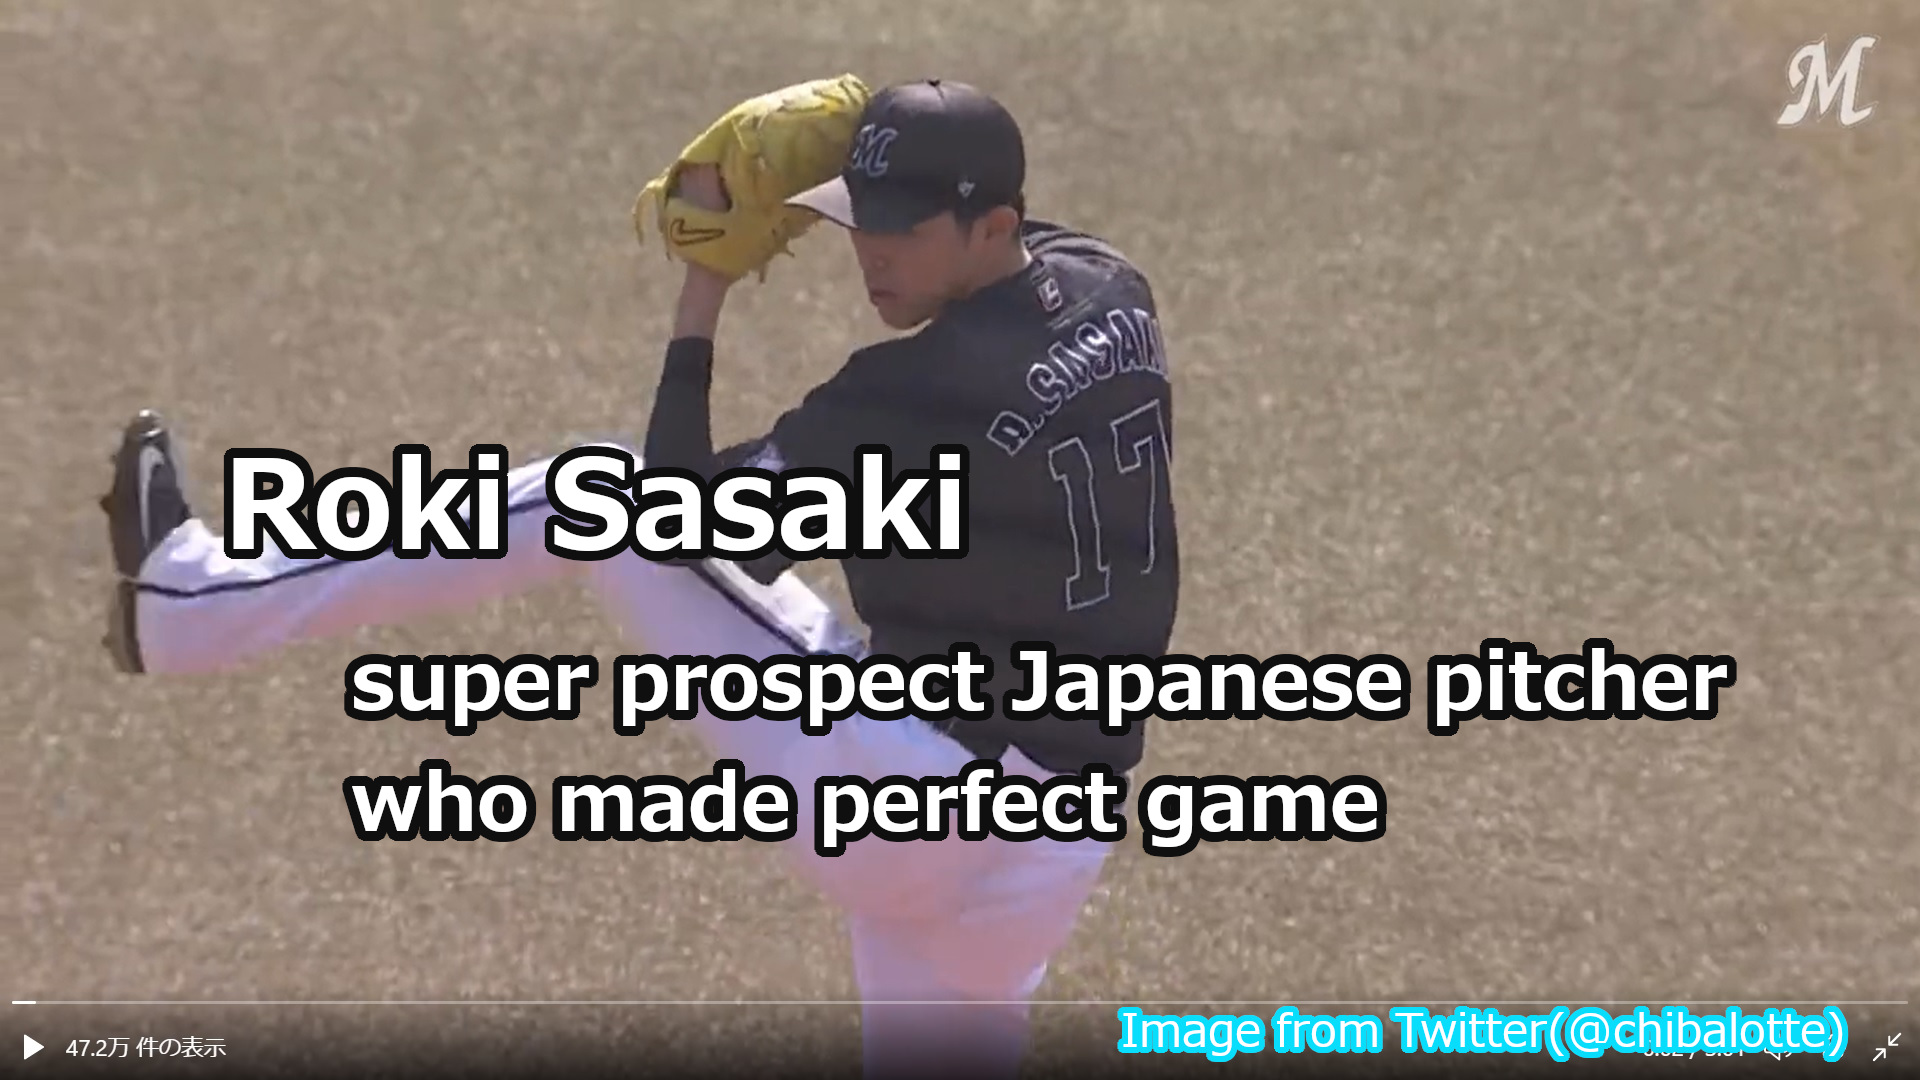 NPB NOTEBOOK] Roki Sasaki Fans 11 in Excellent First Start of